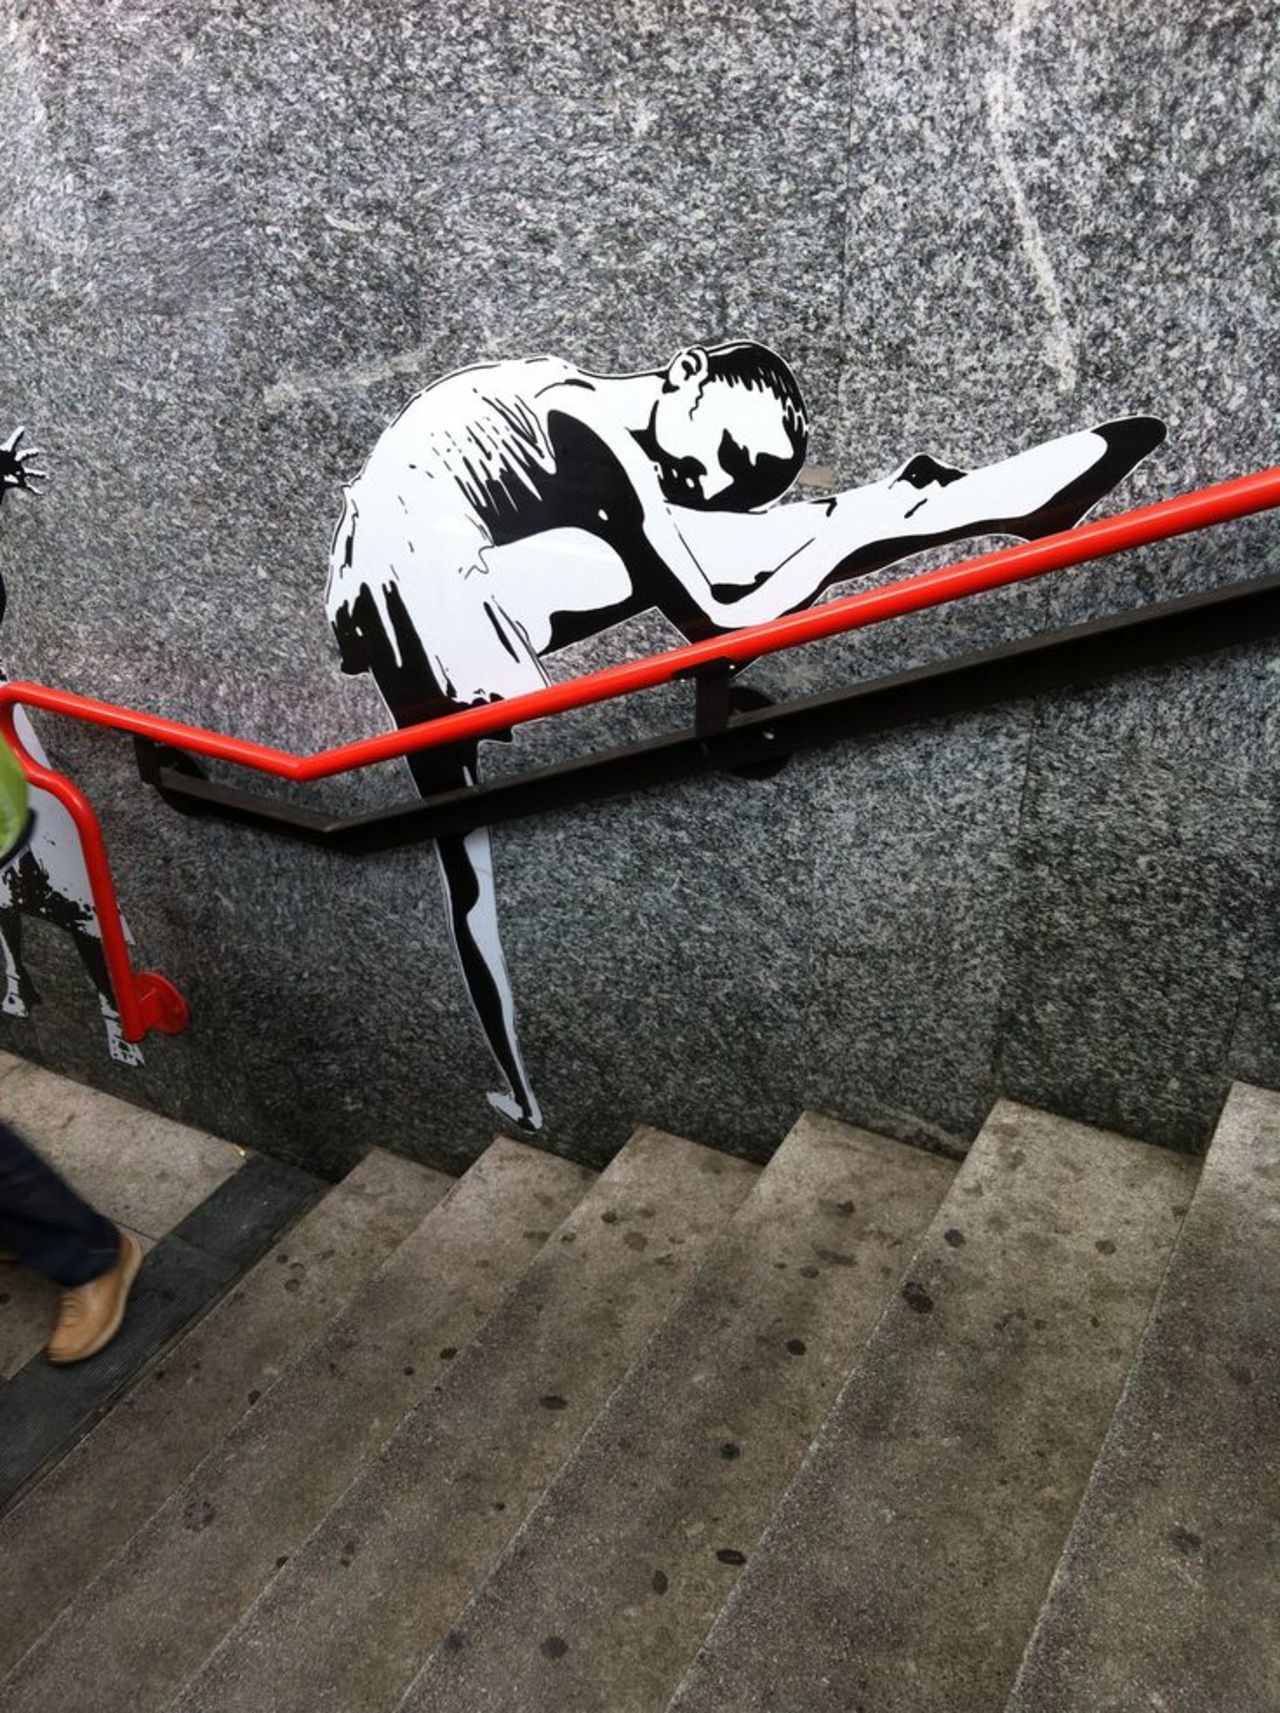 StreetArt from around the World
#StreetArt #art #UrbanArt http://t.co/mfmWxZvsjl